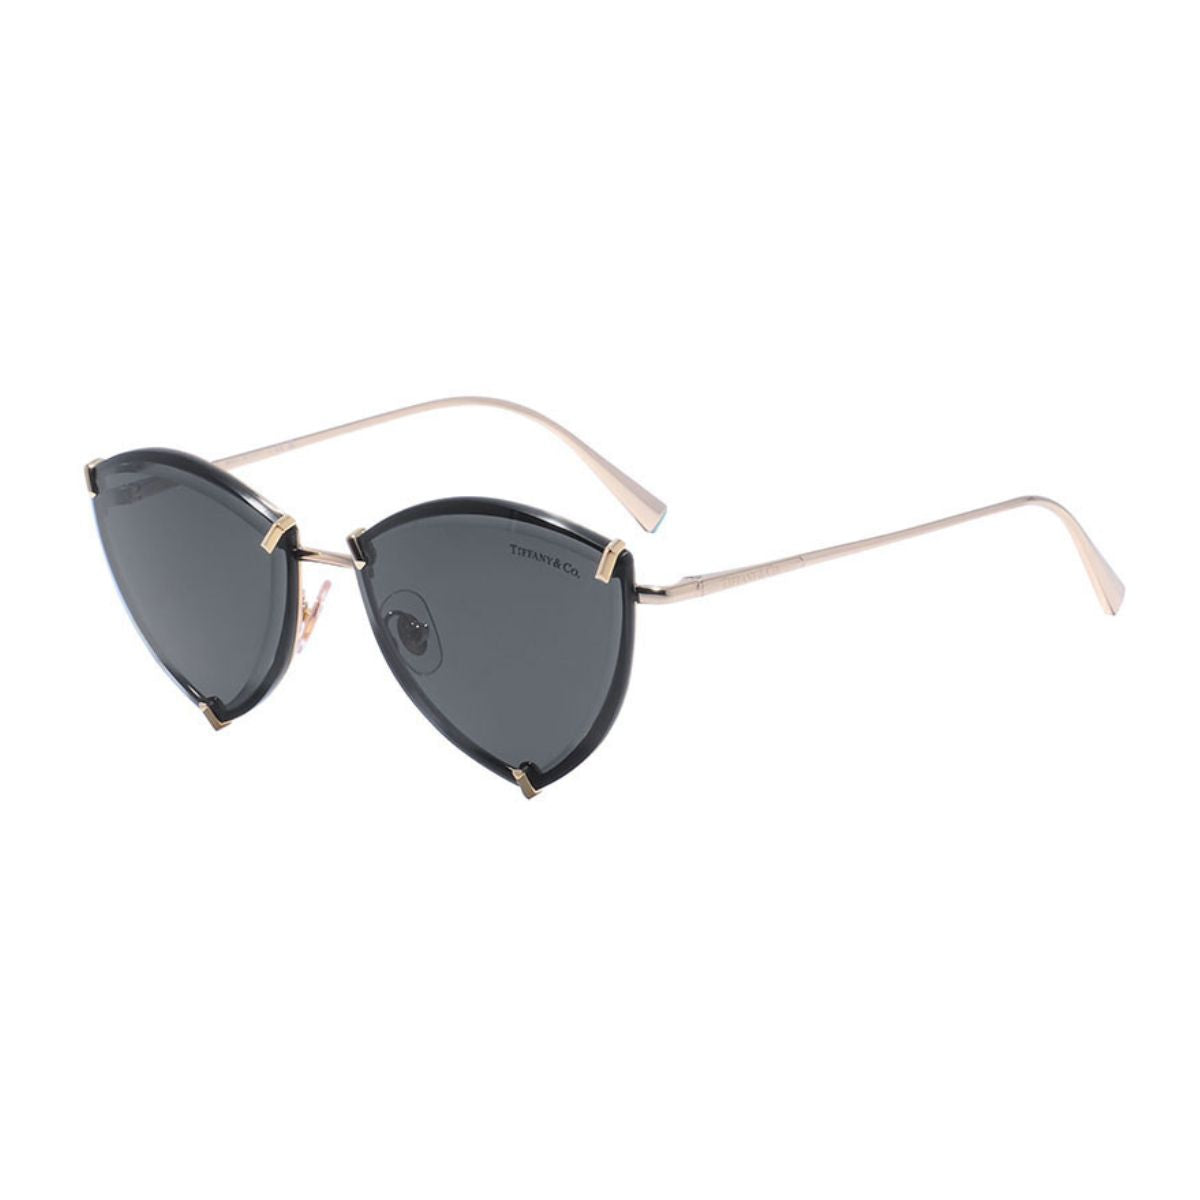 "Tiffany & Co 3090 6002/S4 Sunglass Women's UV protective eyewear Sunglass At Optorium"